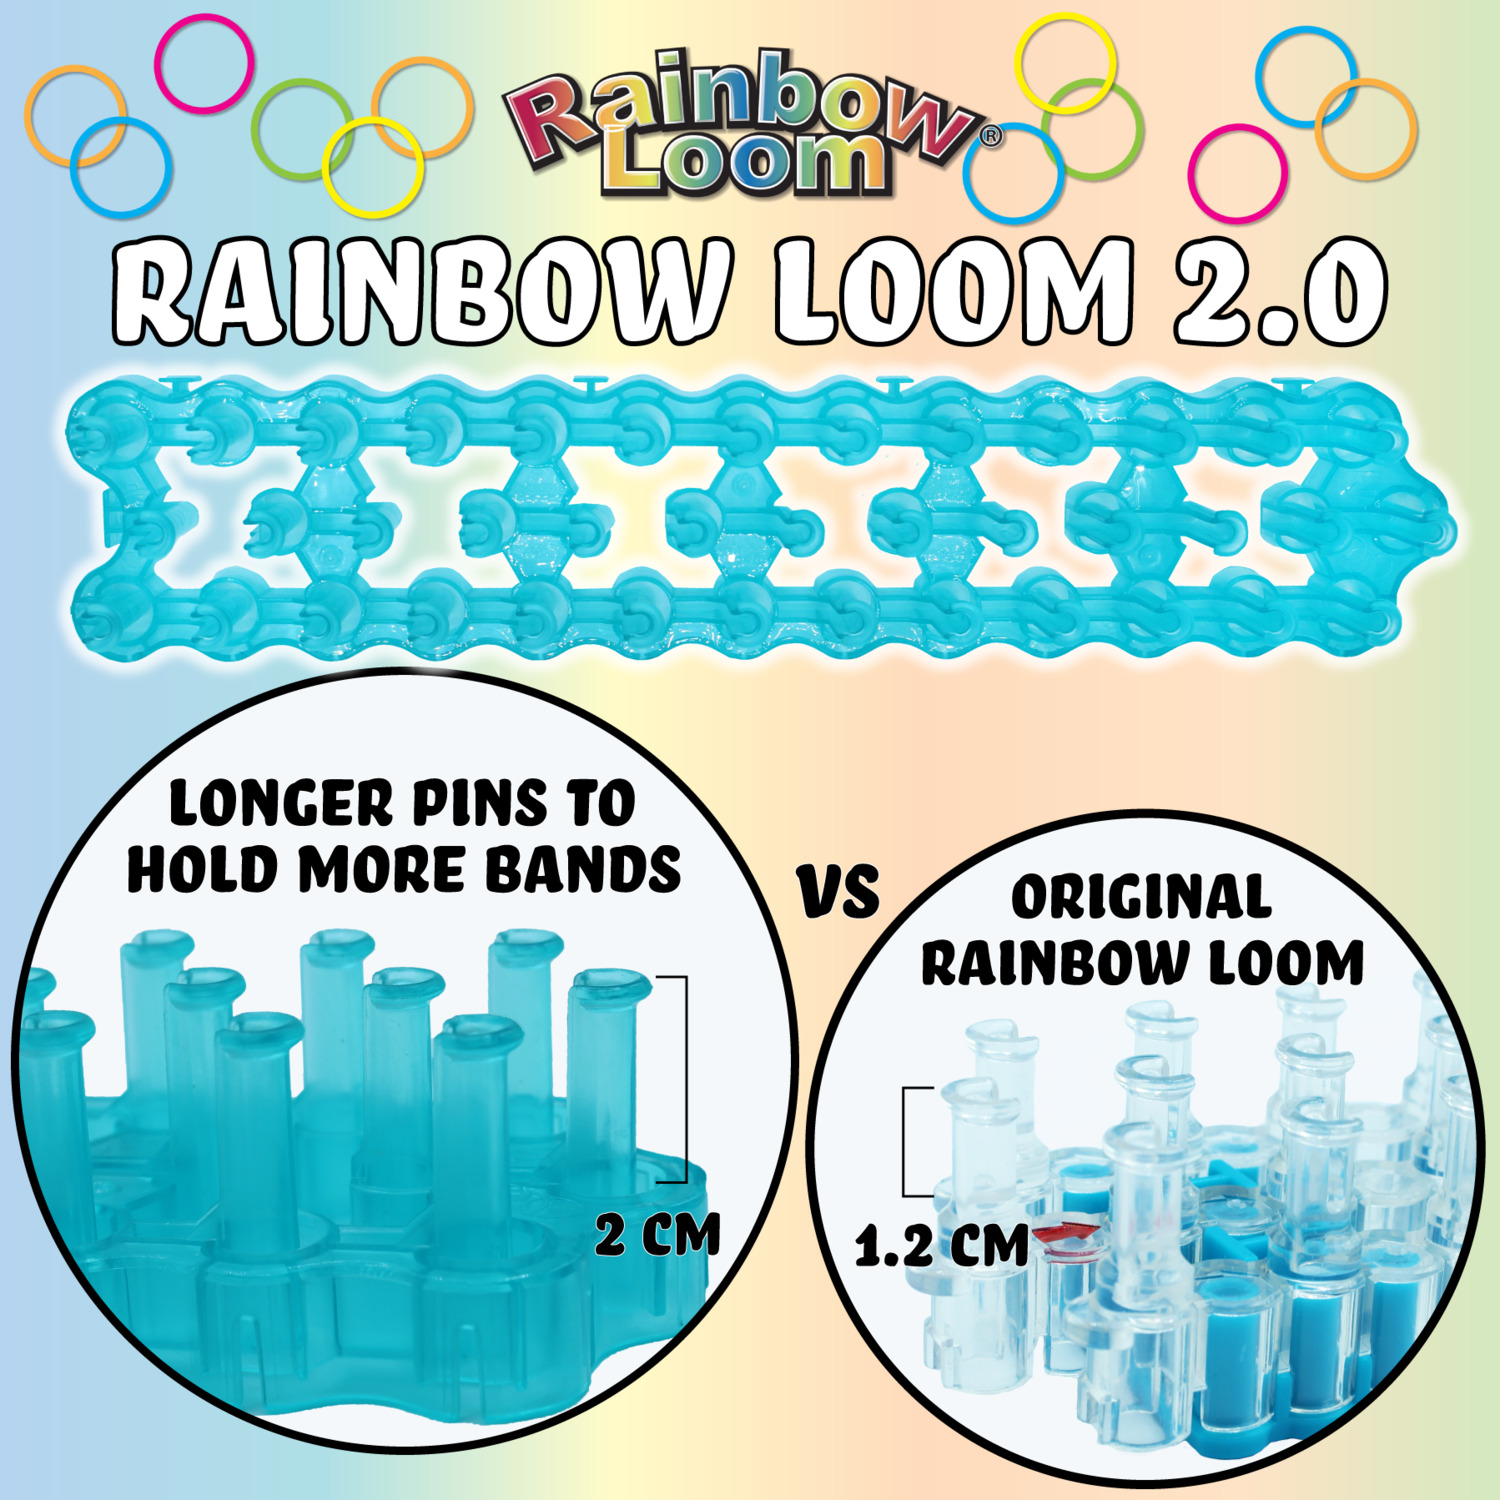 Rainbow Loom The Original Rainbow Loom Kit, For Ages 7+, By Choon's Design